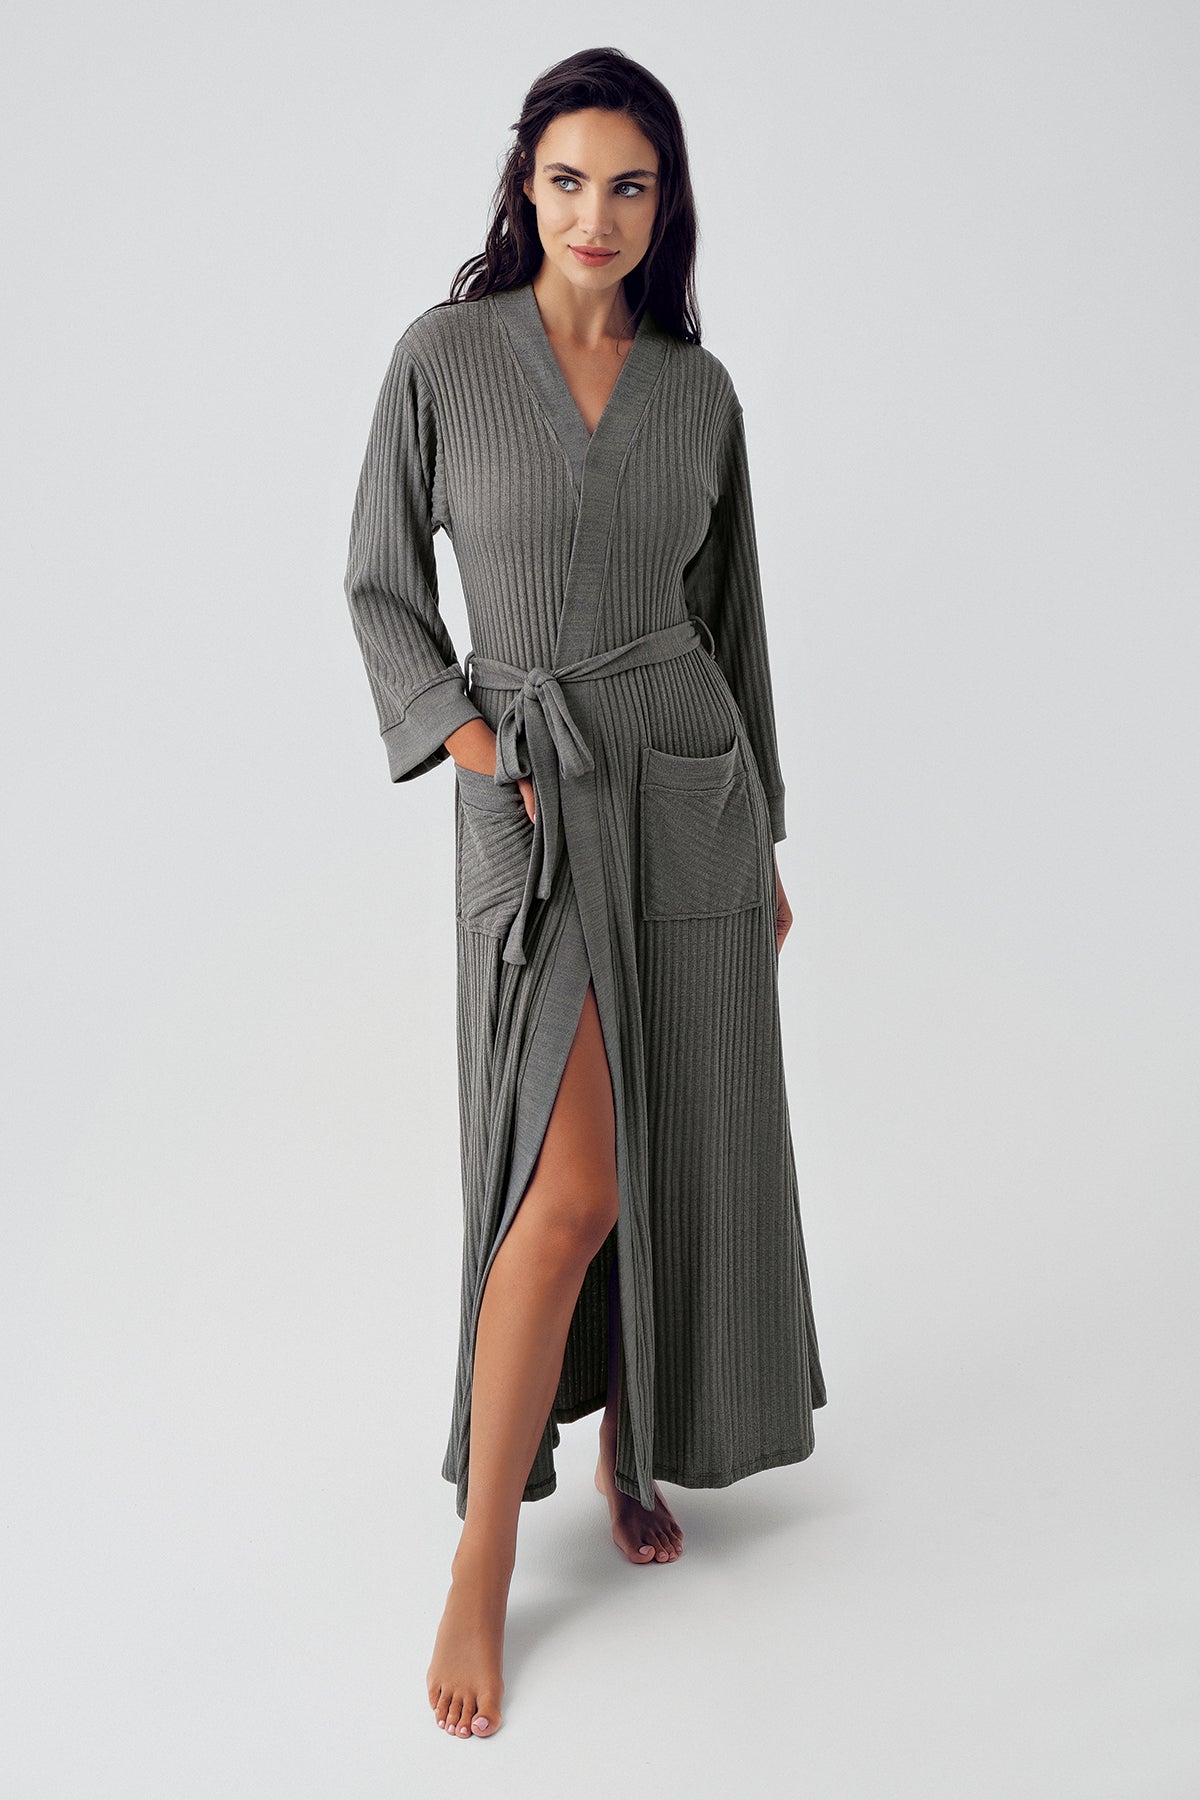 Shopymommy 15508 Jacquard Knitwear Long Maternity Robe Khaki